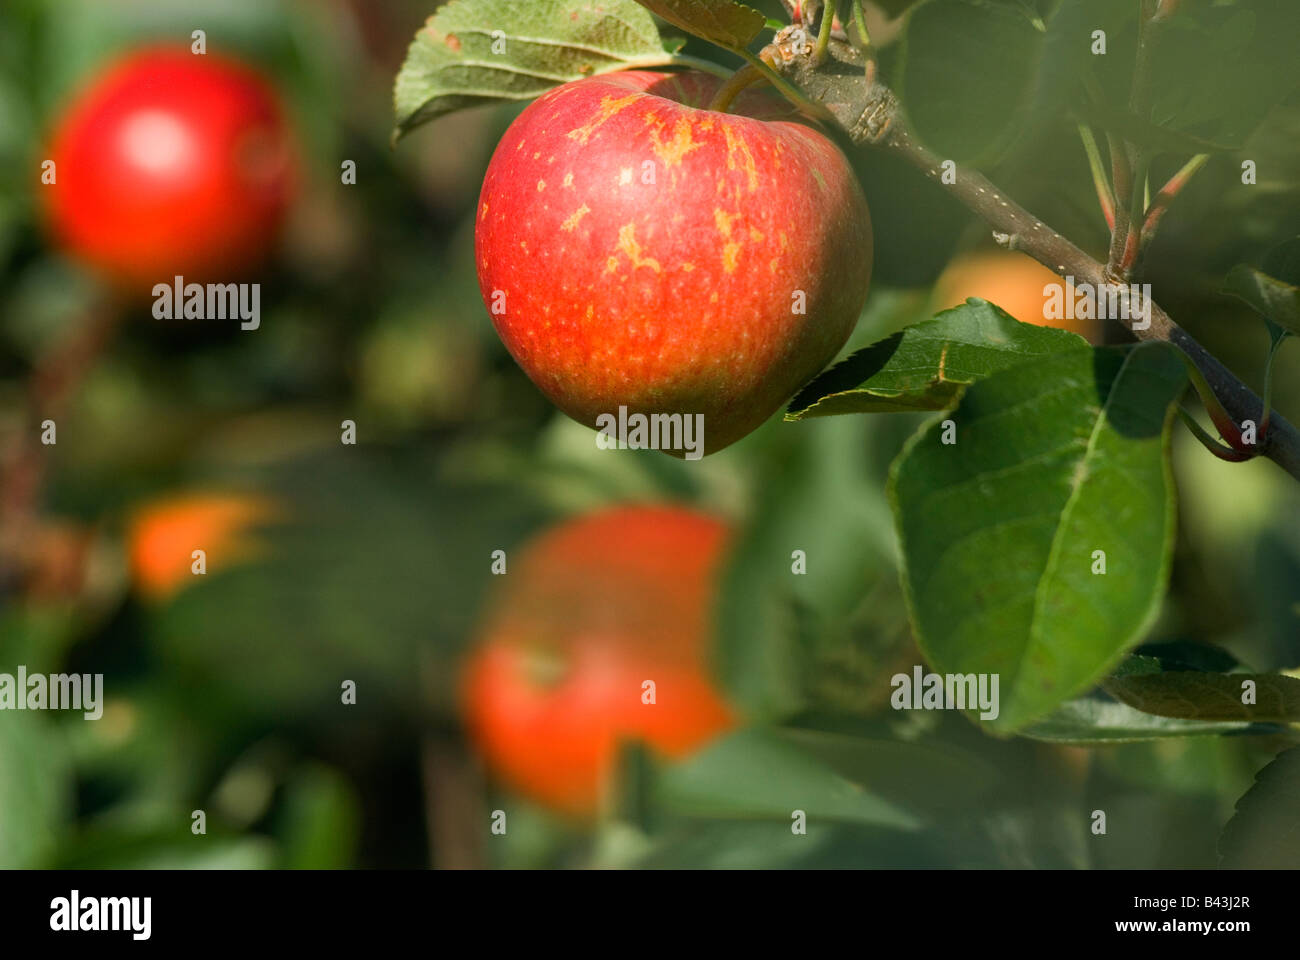 English Apples Lathcoats Apple Farm Galleywood Essex UK  Kidds Orange apple. Stock Photo